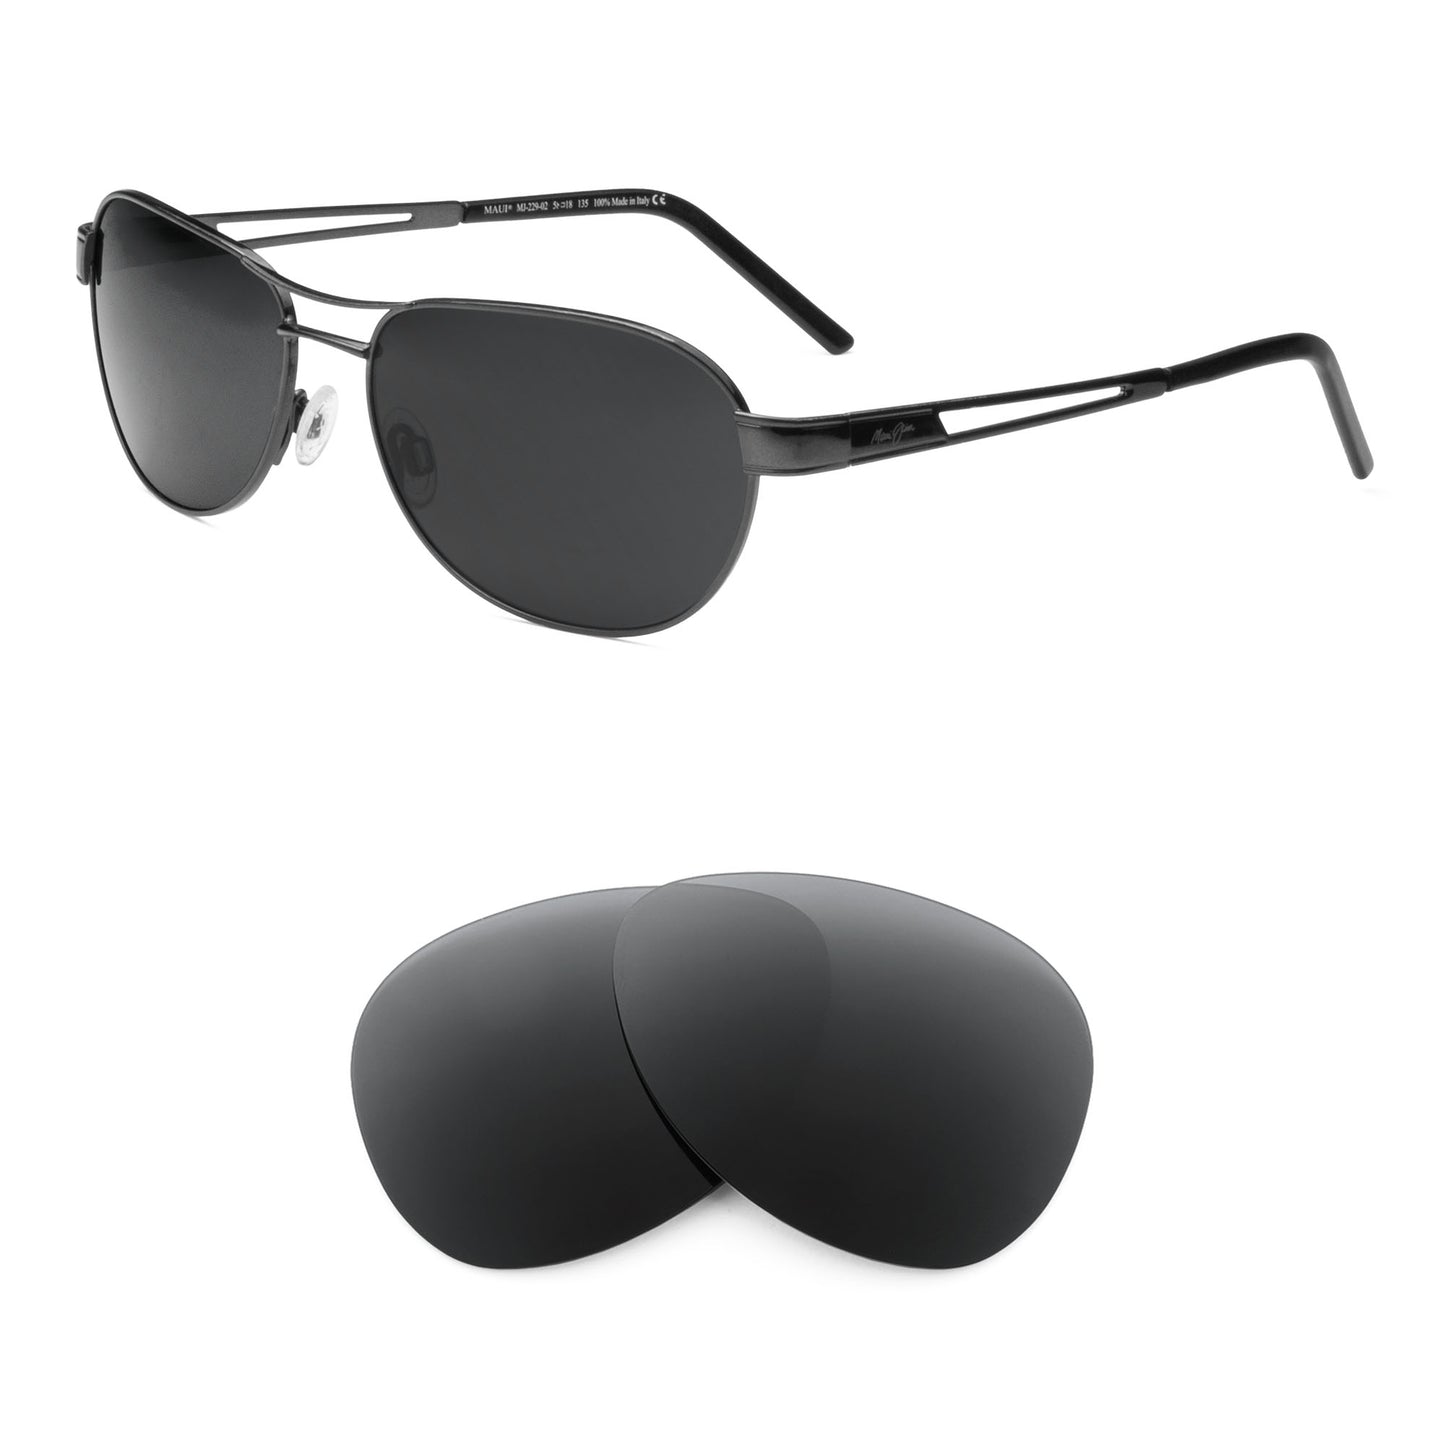 Maui Jim Mahina MJ229 sunglasses with replacement lenses